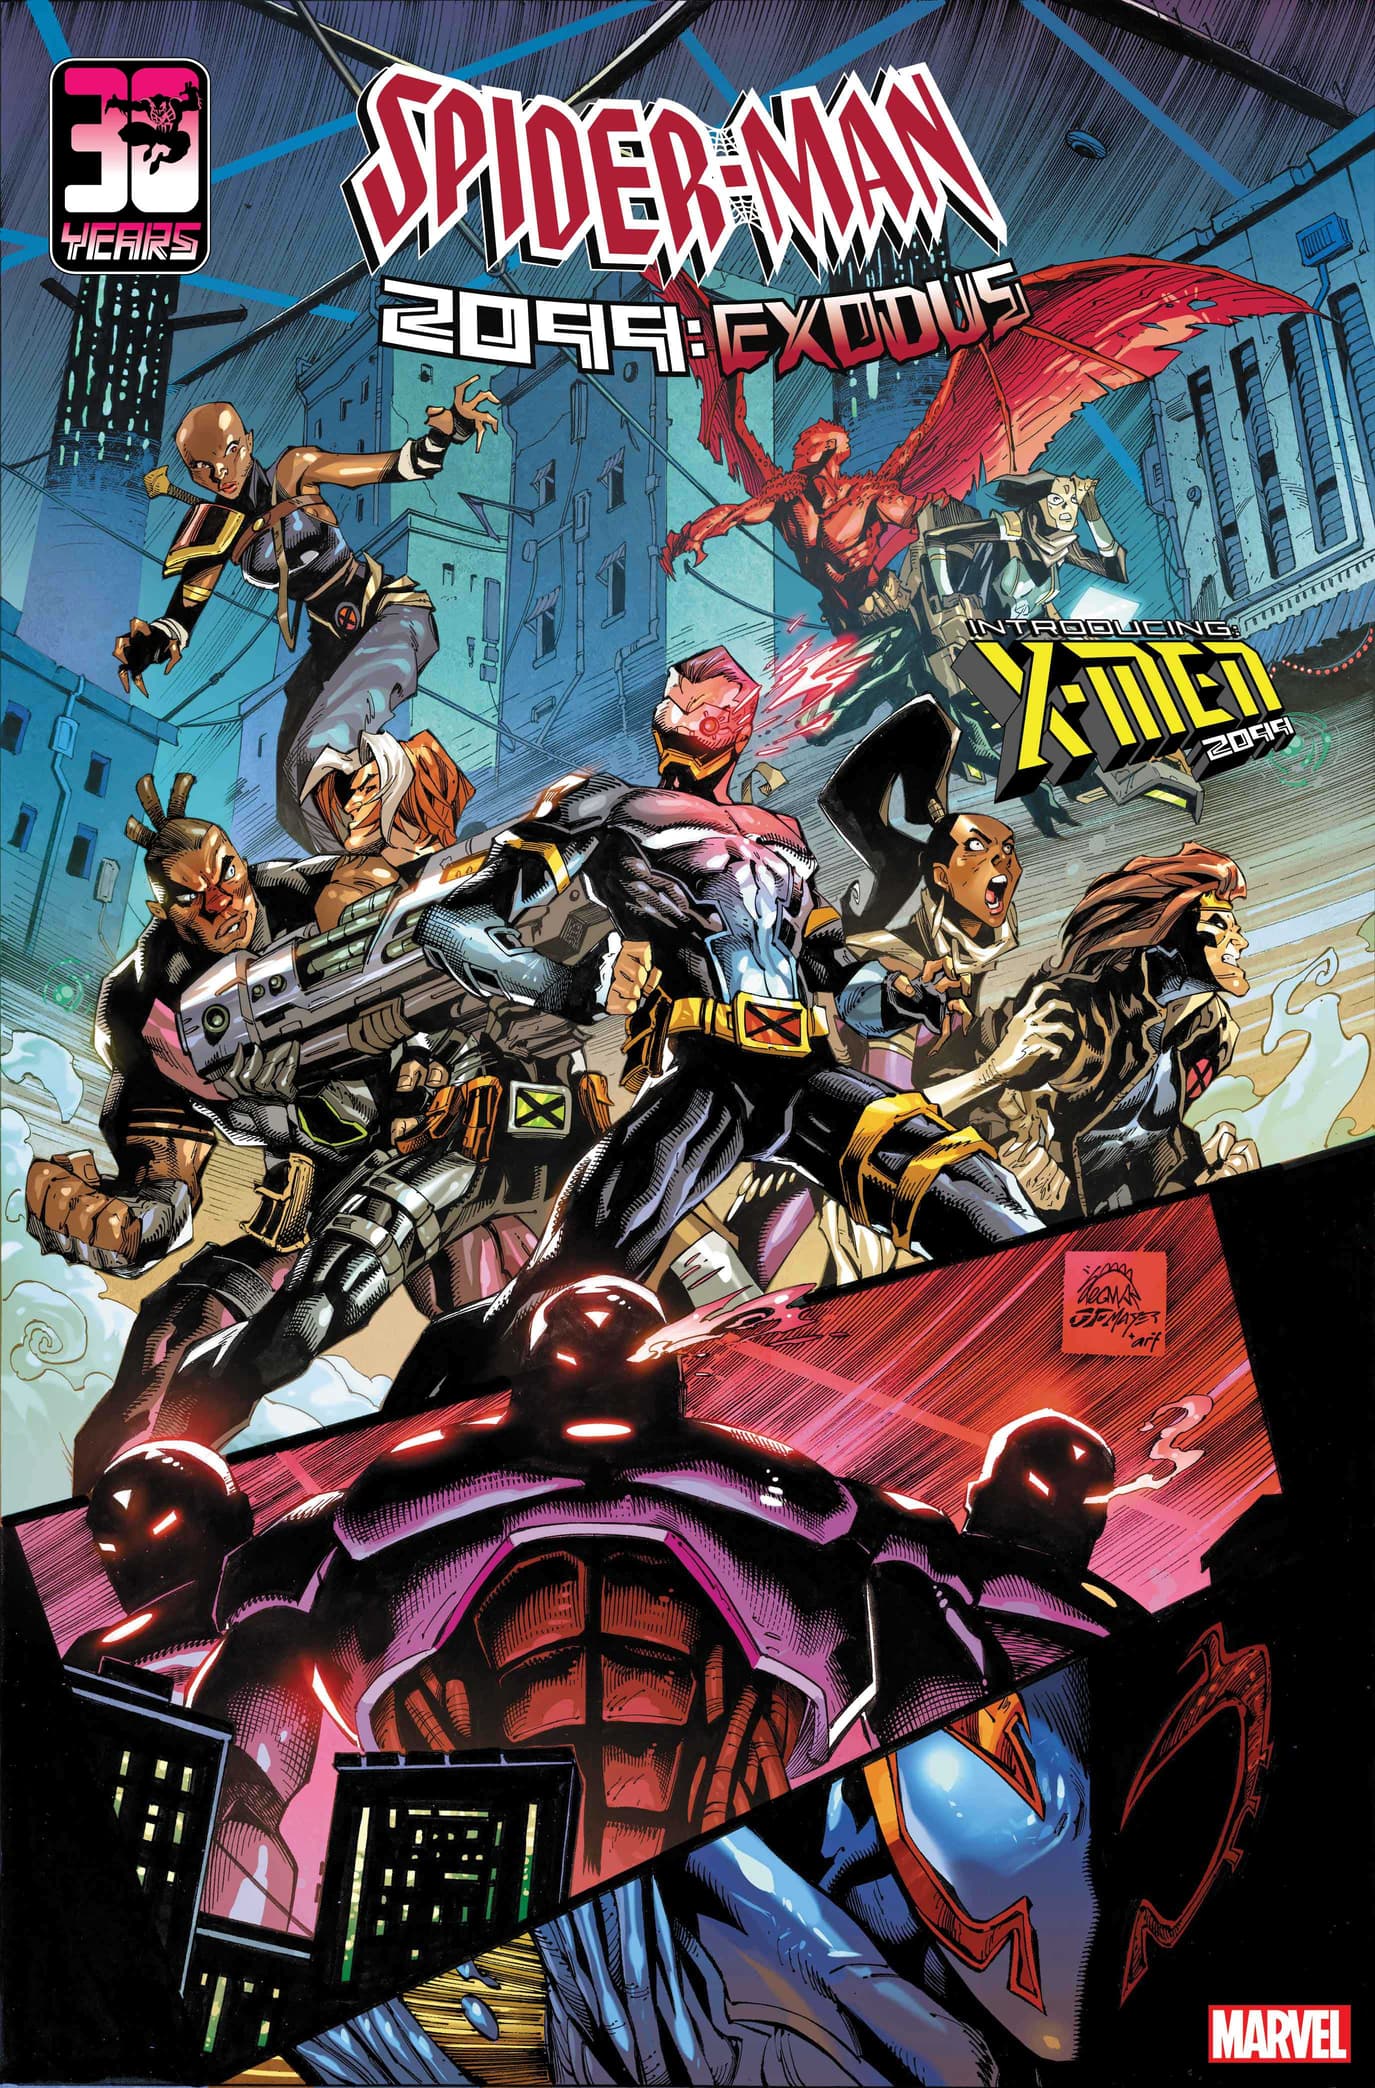 Spider-Man 2099: Exodus #5 Cover by Ryan Stegman, JP Mayer, & Arif Prianto.